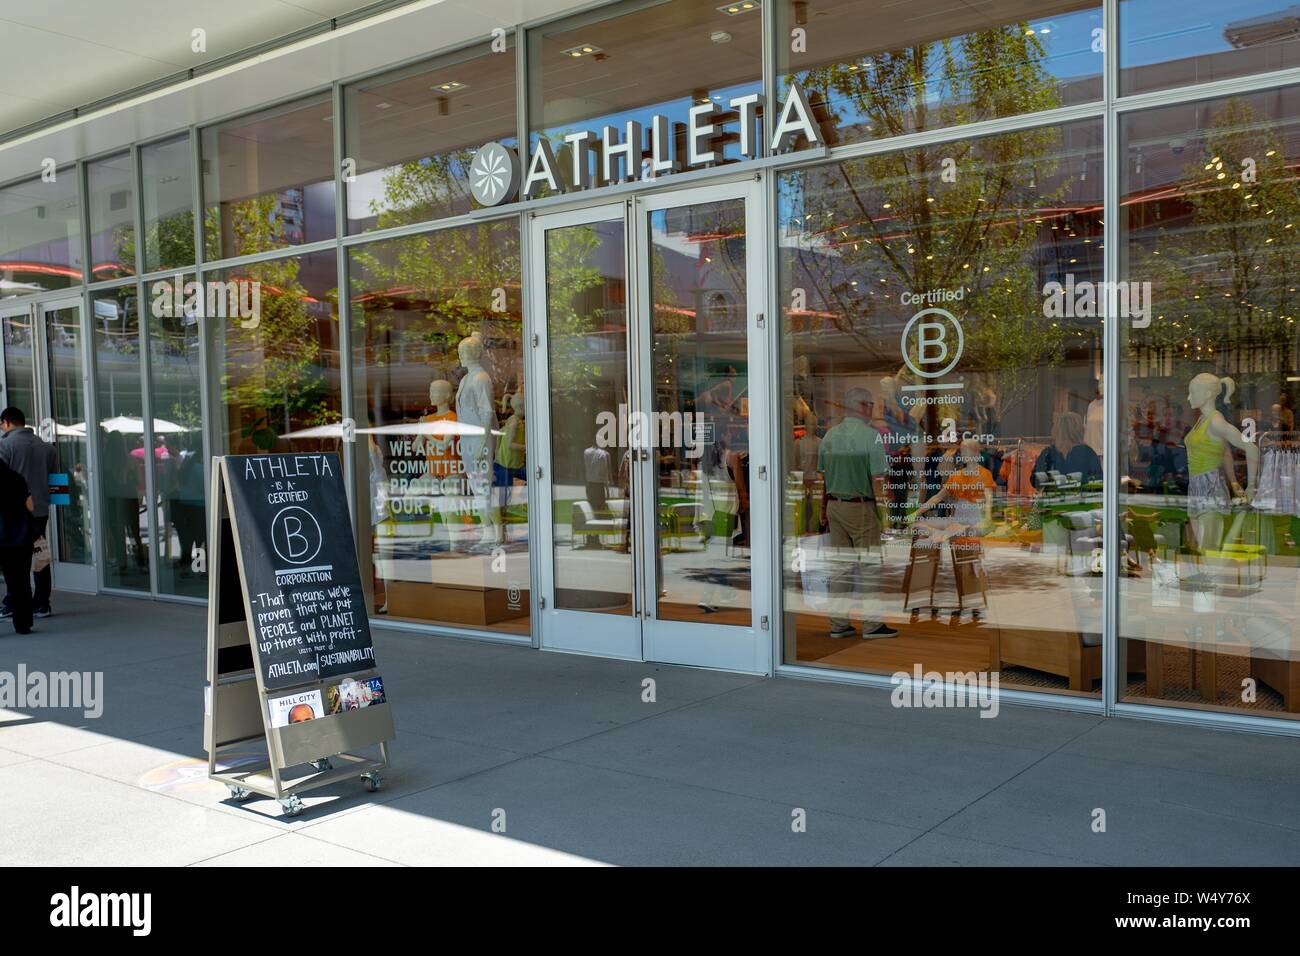 Facade of athleisure clothing retailer Athleta, with Benefit Corporation (B Corp) insignia, at City Center shopping center in San Ramon, California, May 31, 2019. () Stock Photo